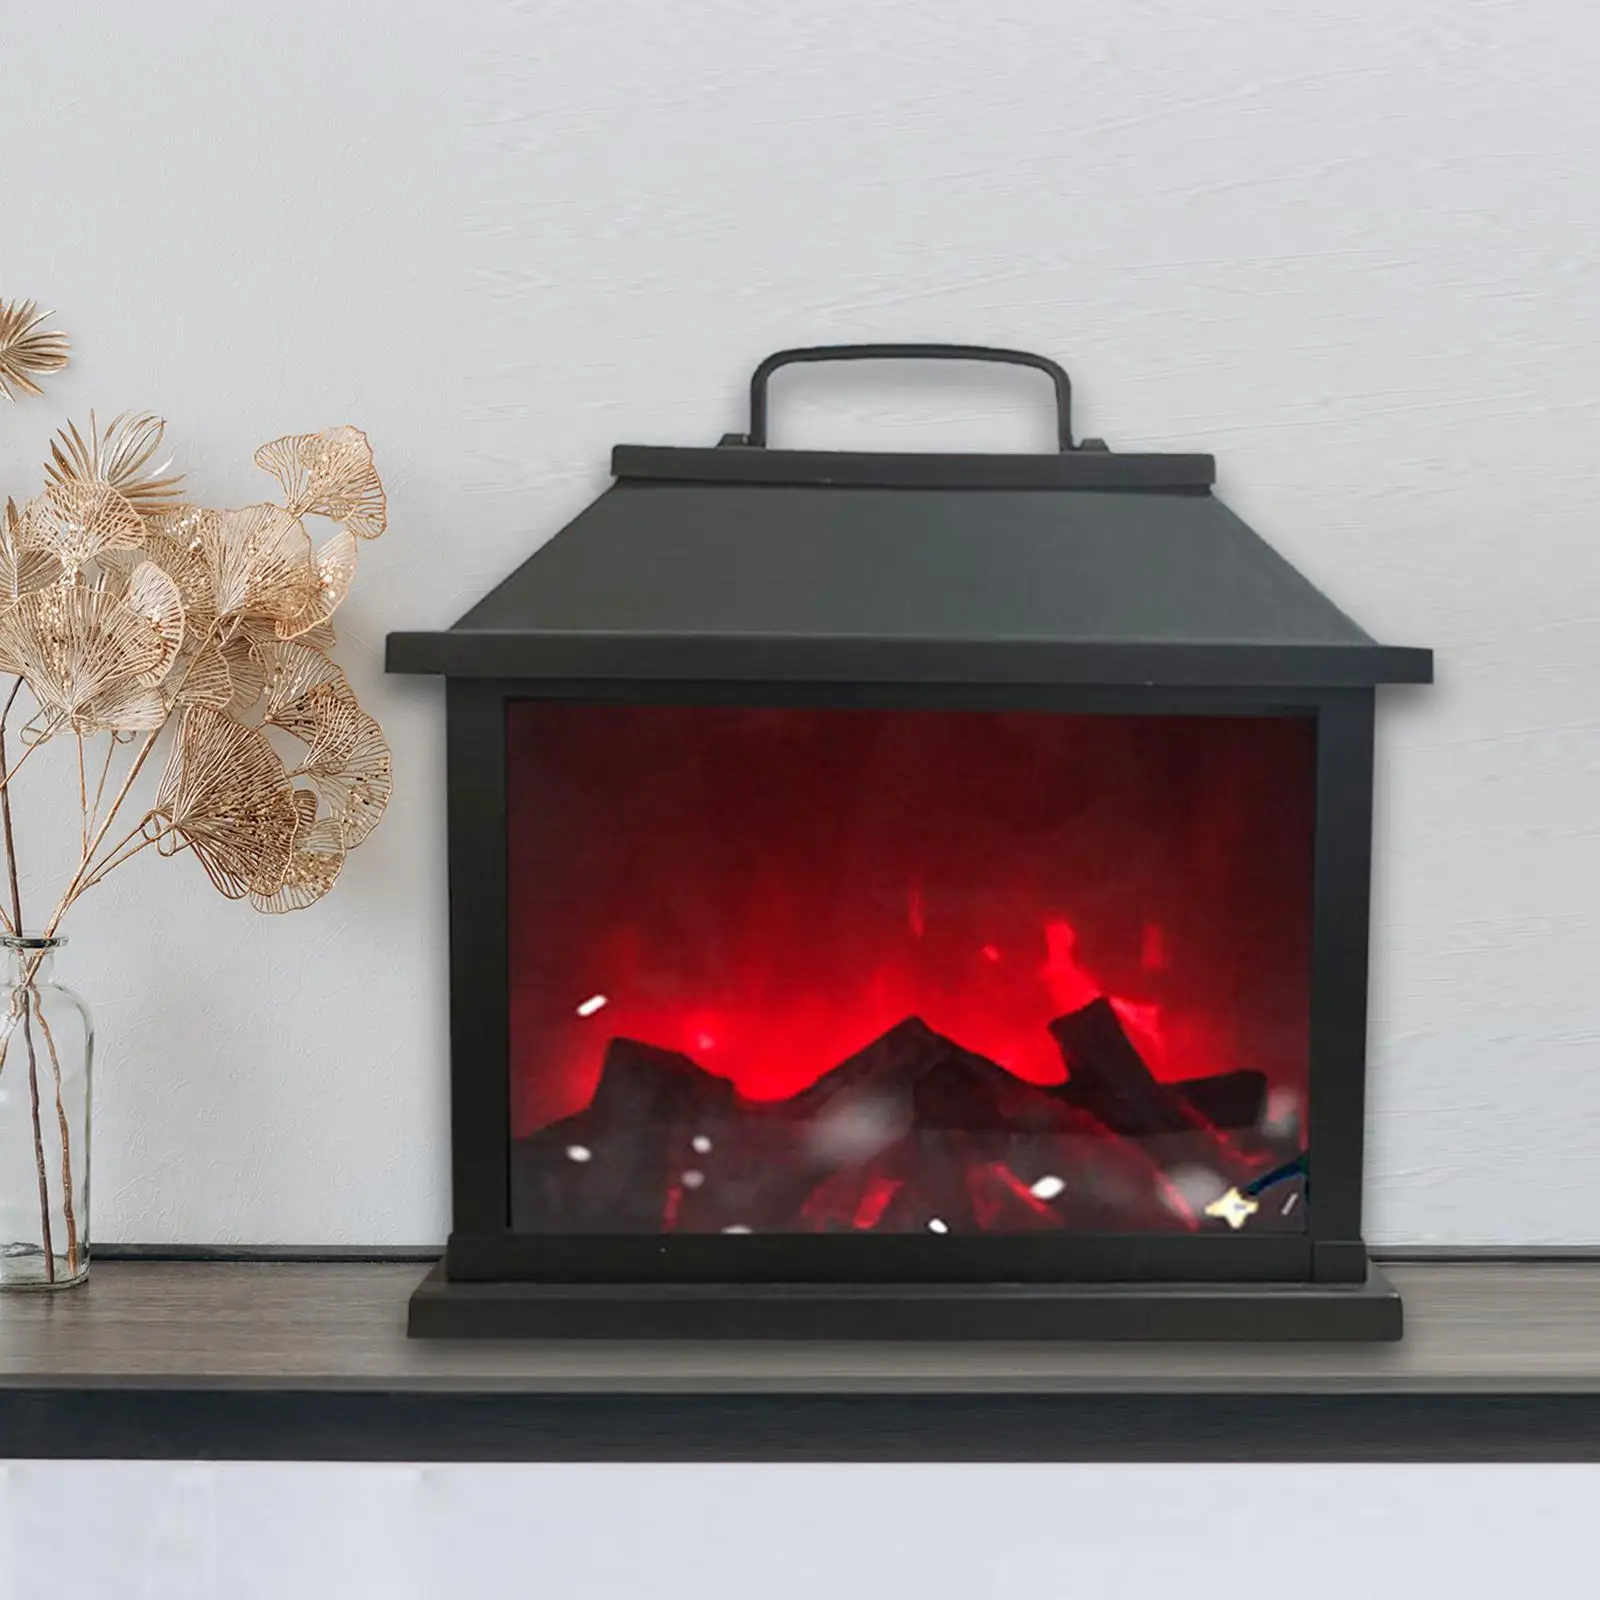 LED Fireplace Lantern Tabletop Lamp /USB Powered Home Decor